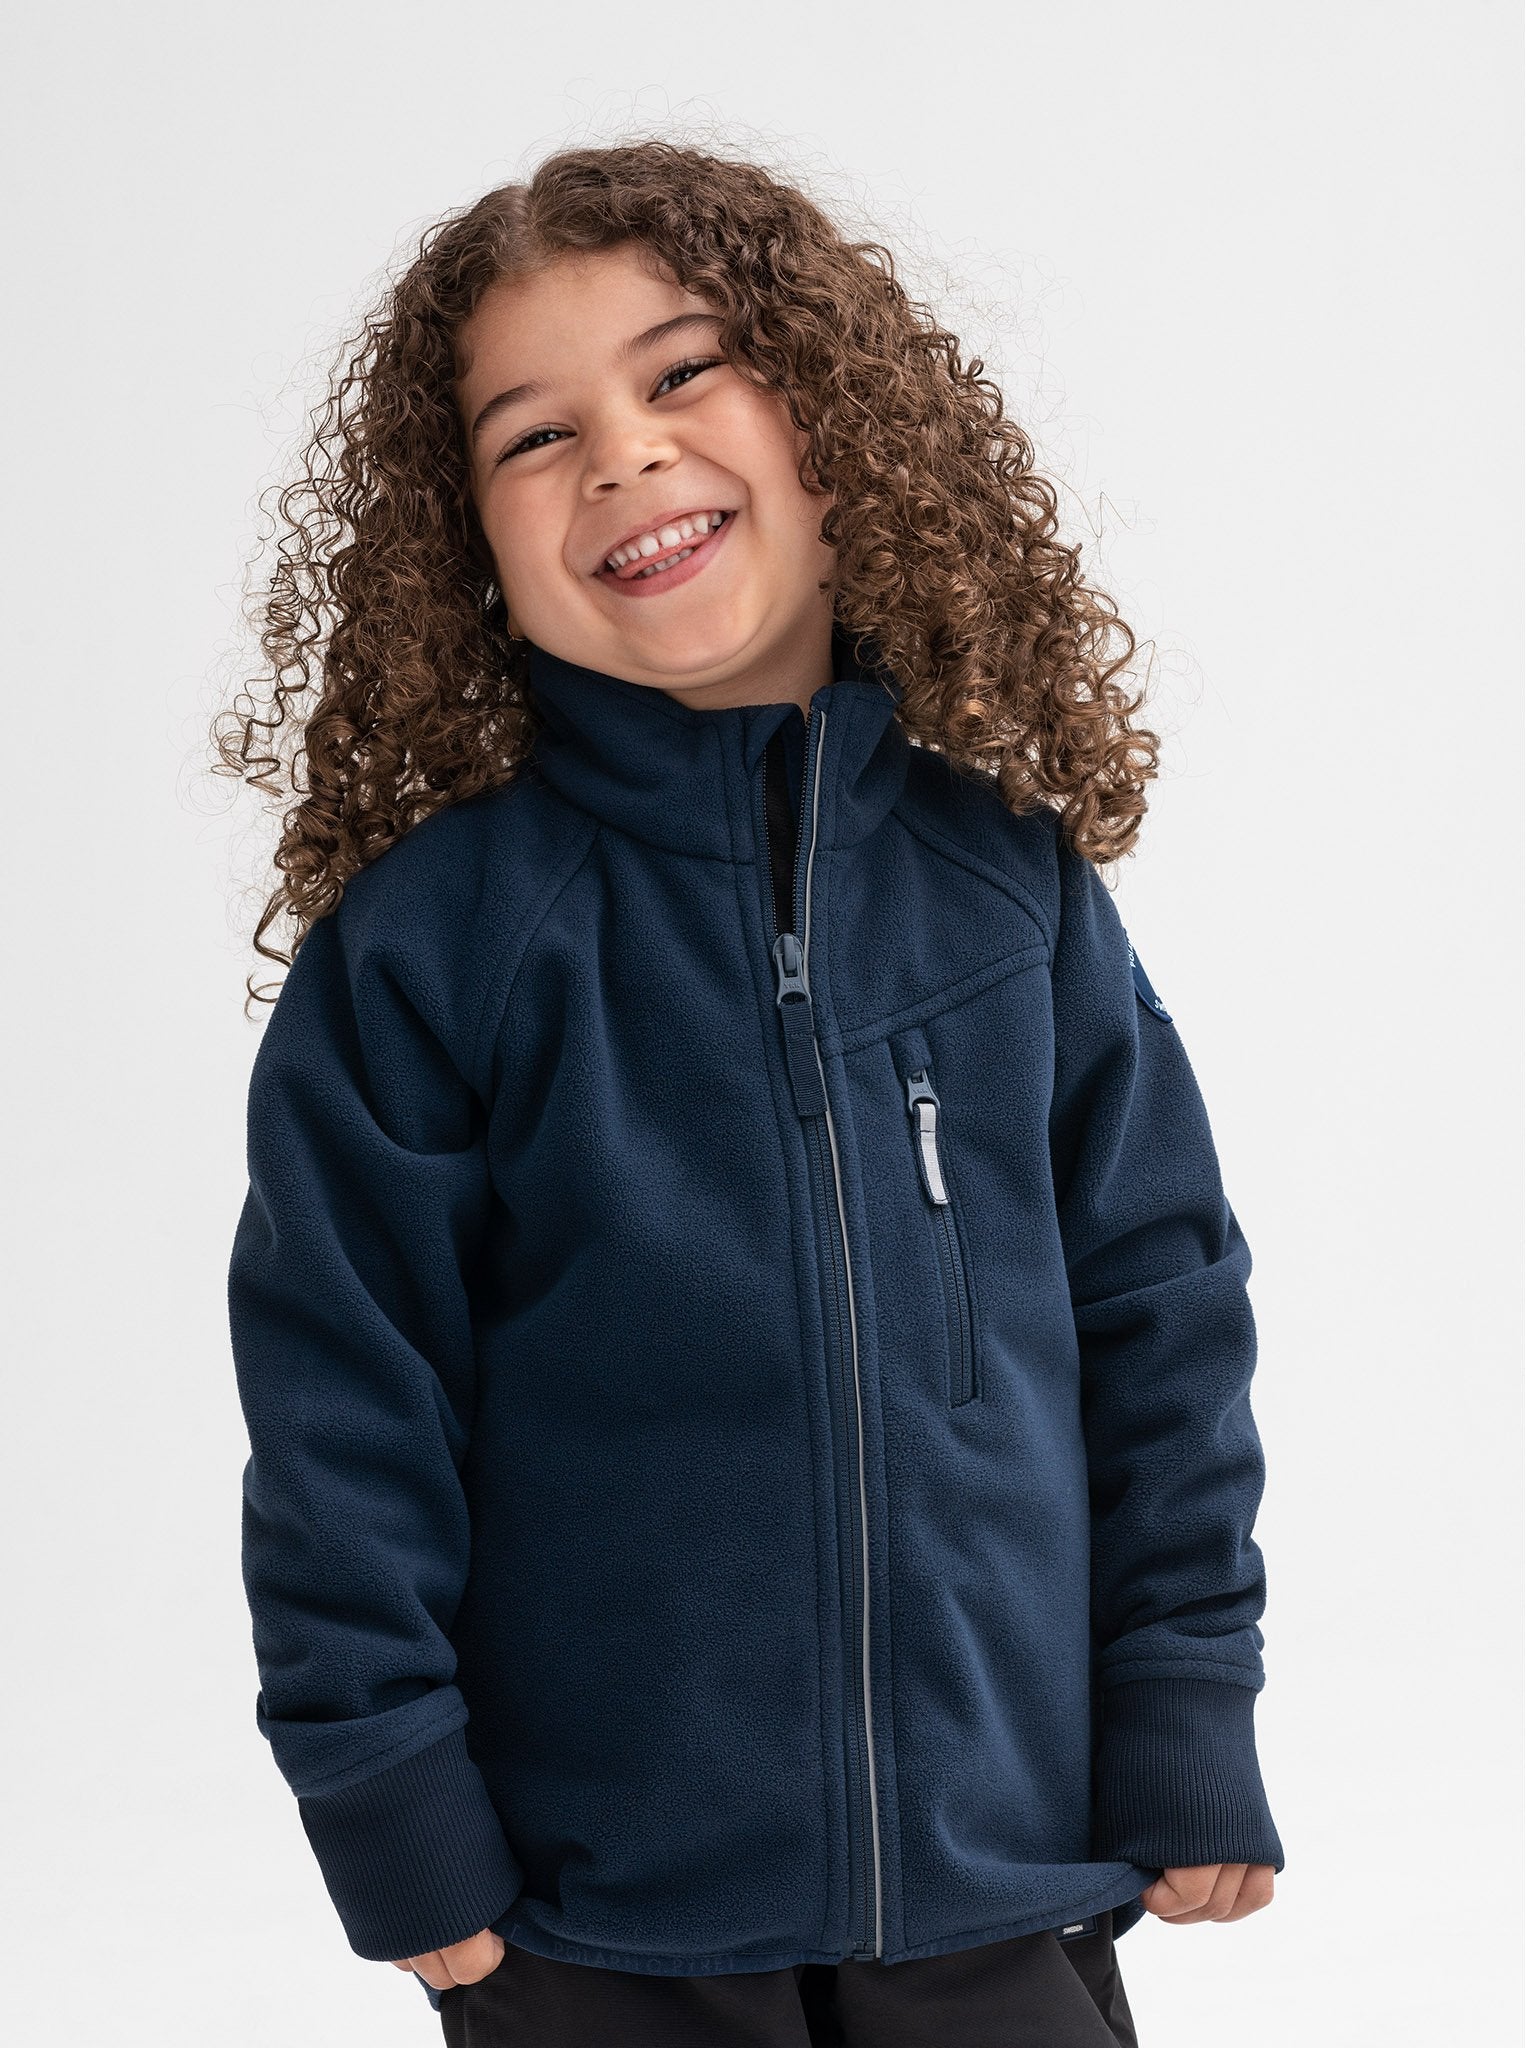 Kids navy waterproof fleece jacket, warm and breathable, high quality